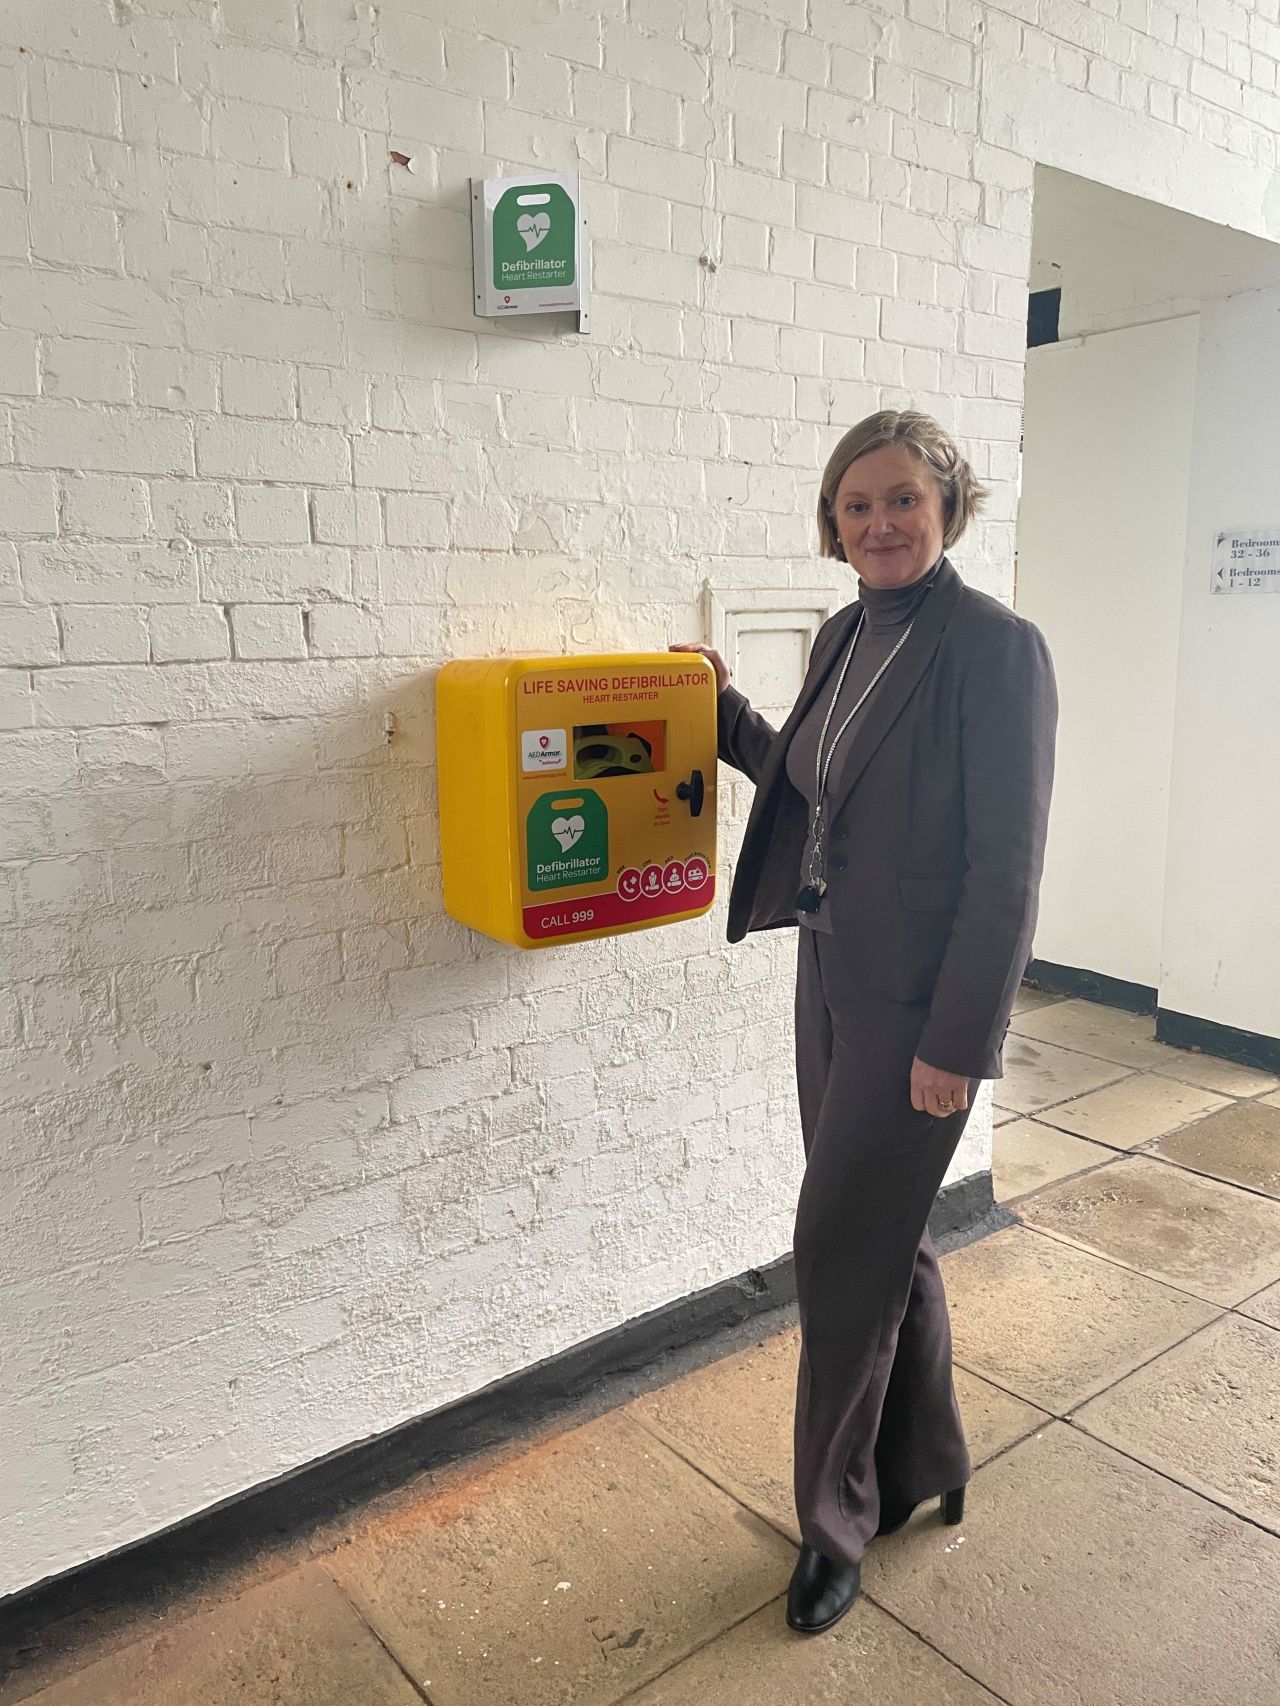 Learner donates defibrillator to Ashorne Hill